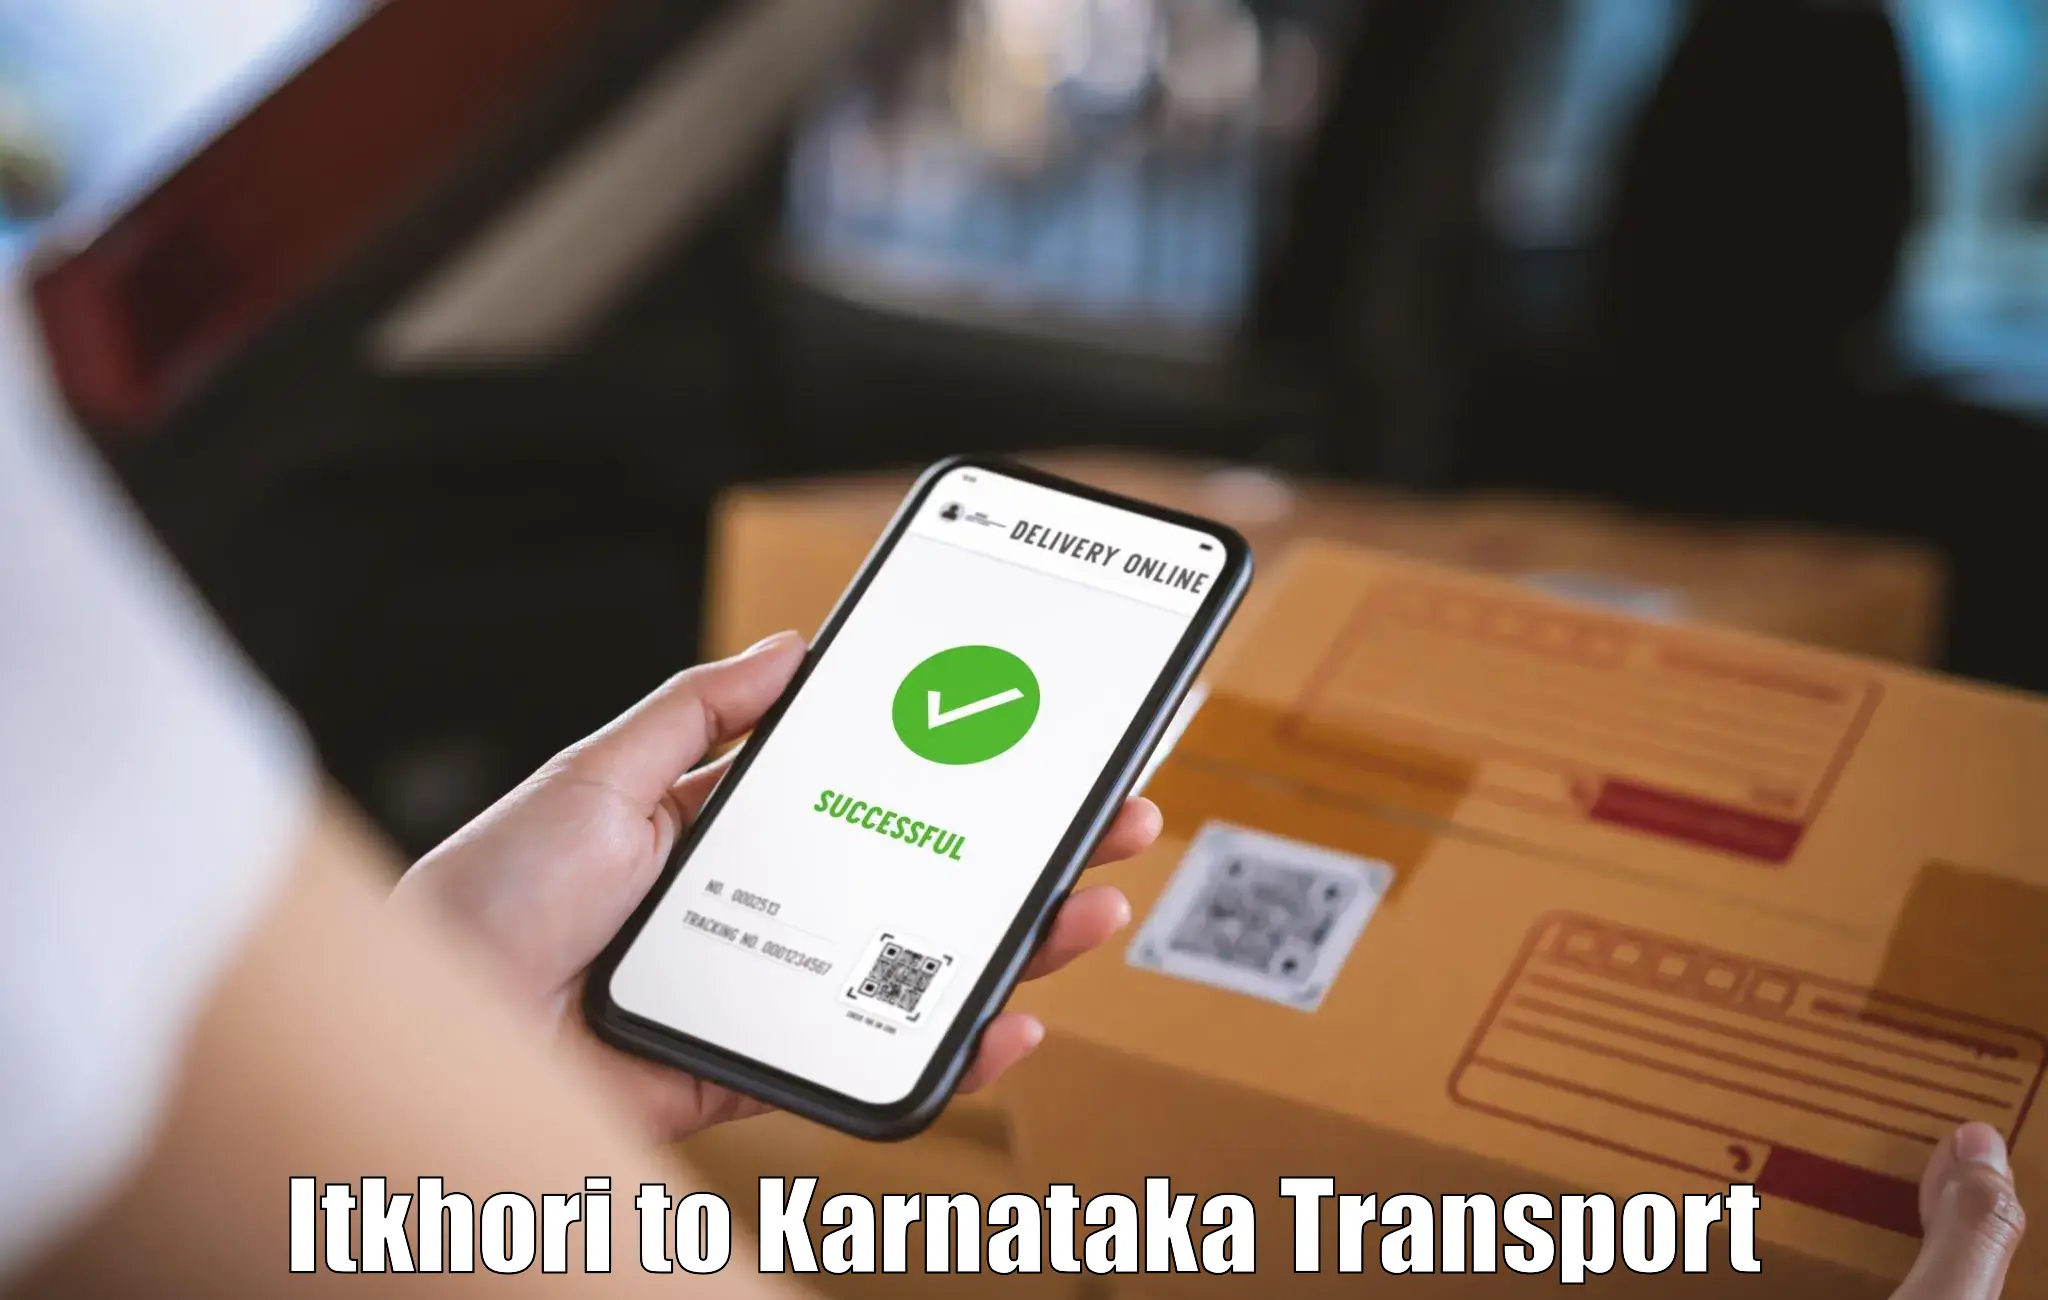 Transport bike from one state to another Itkhori to Harohalli